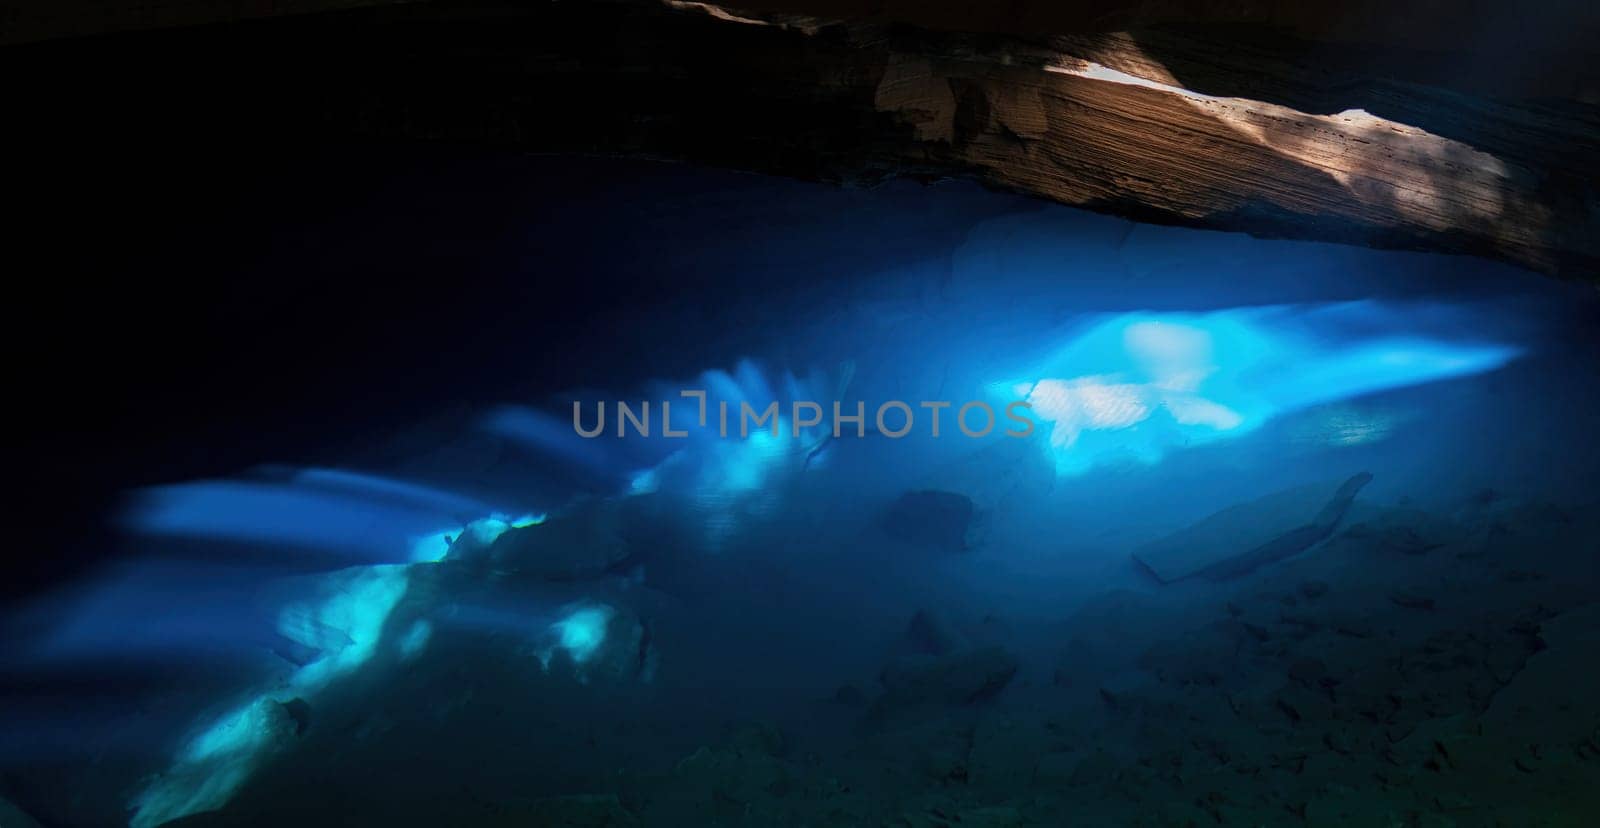 Mystical Blue Ray Light Piercing Through Serene Cave Underwater by FerradalFCG